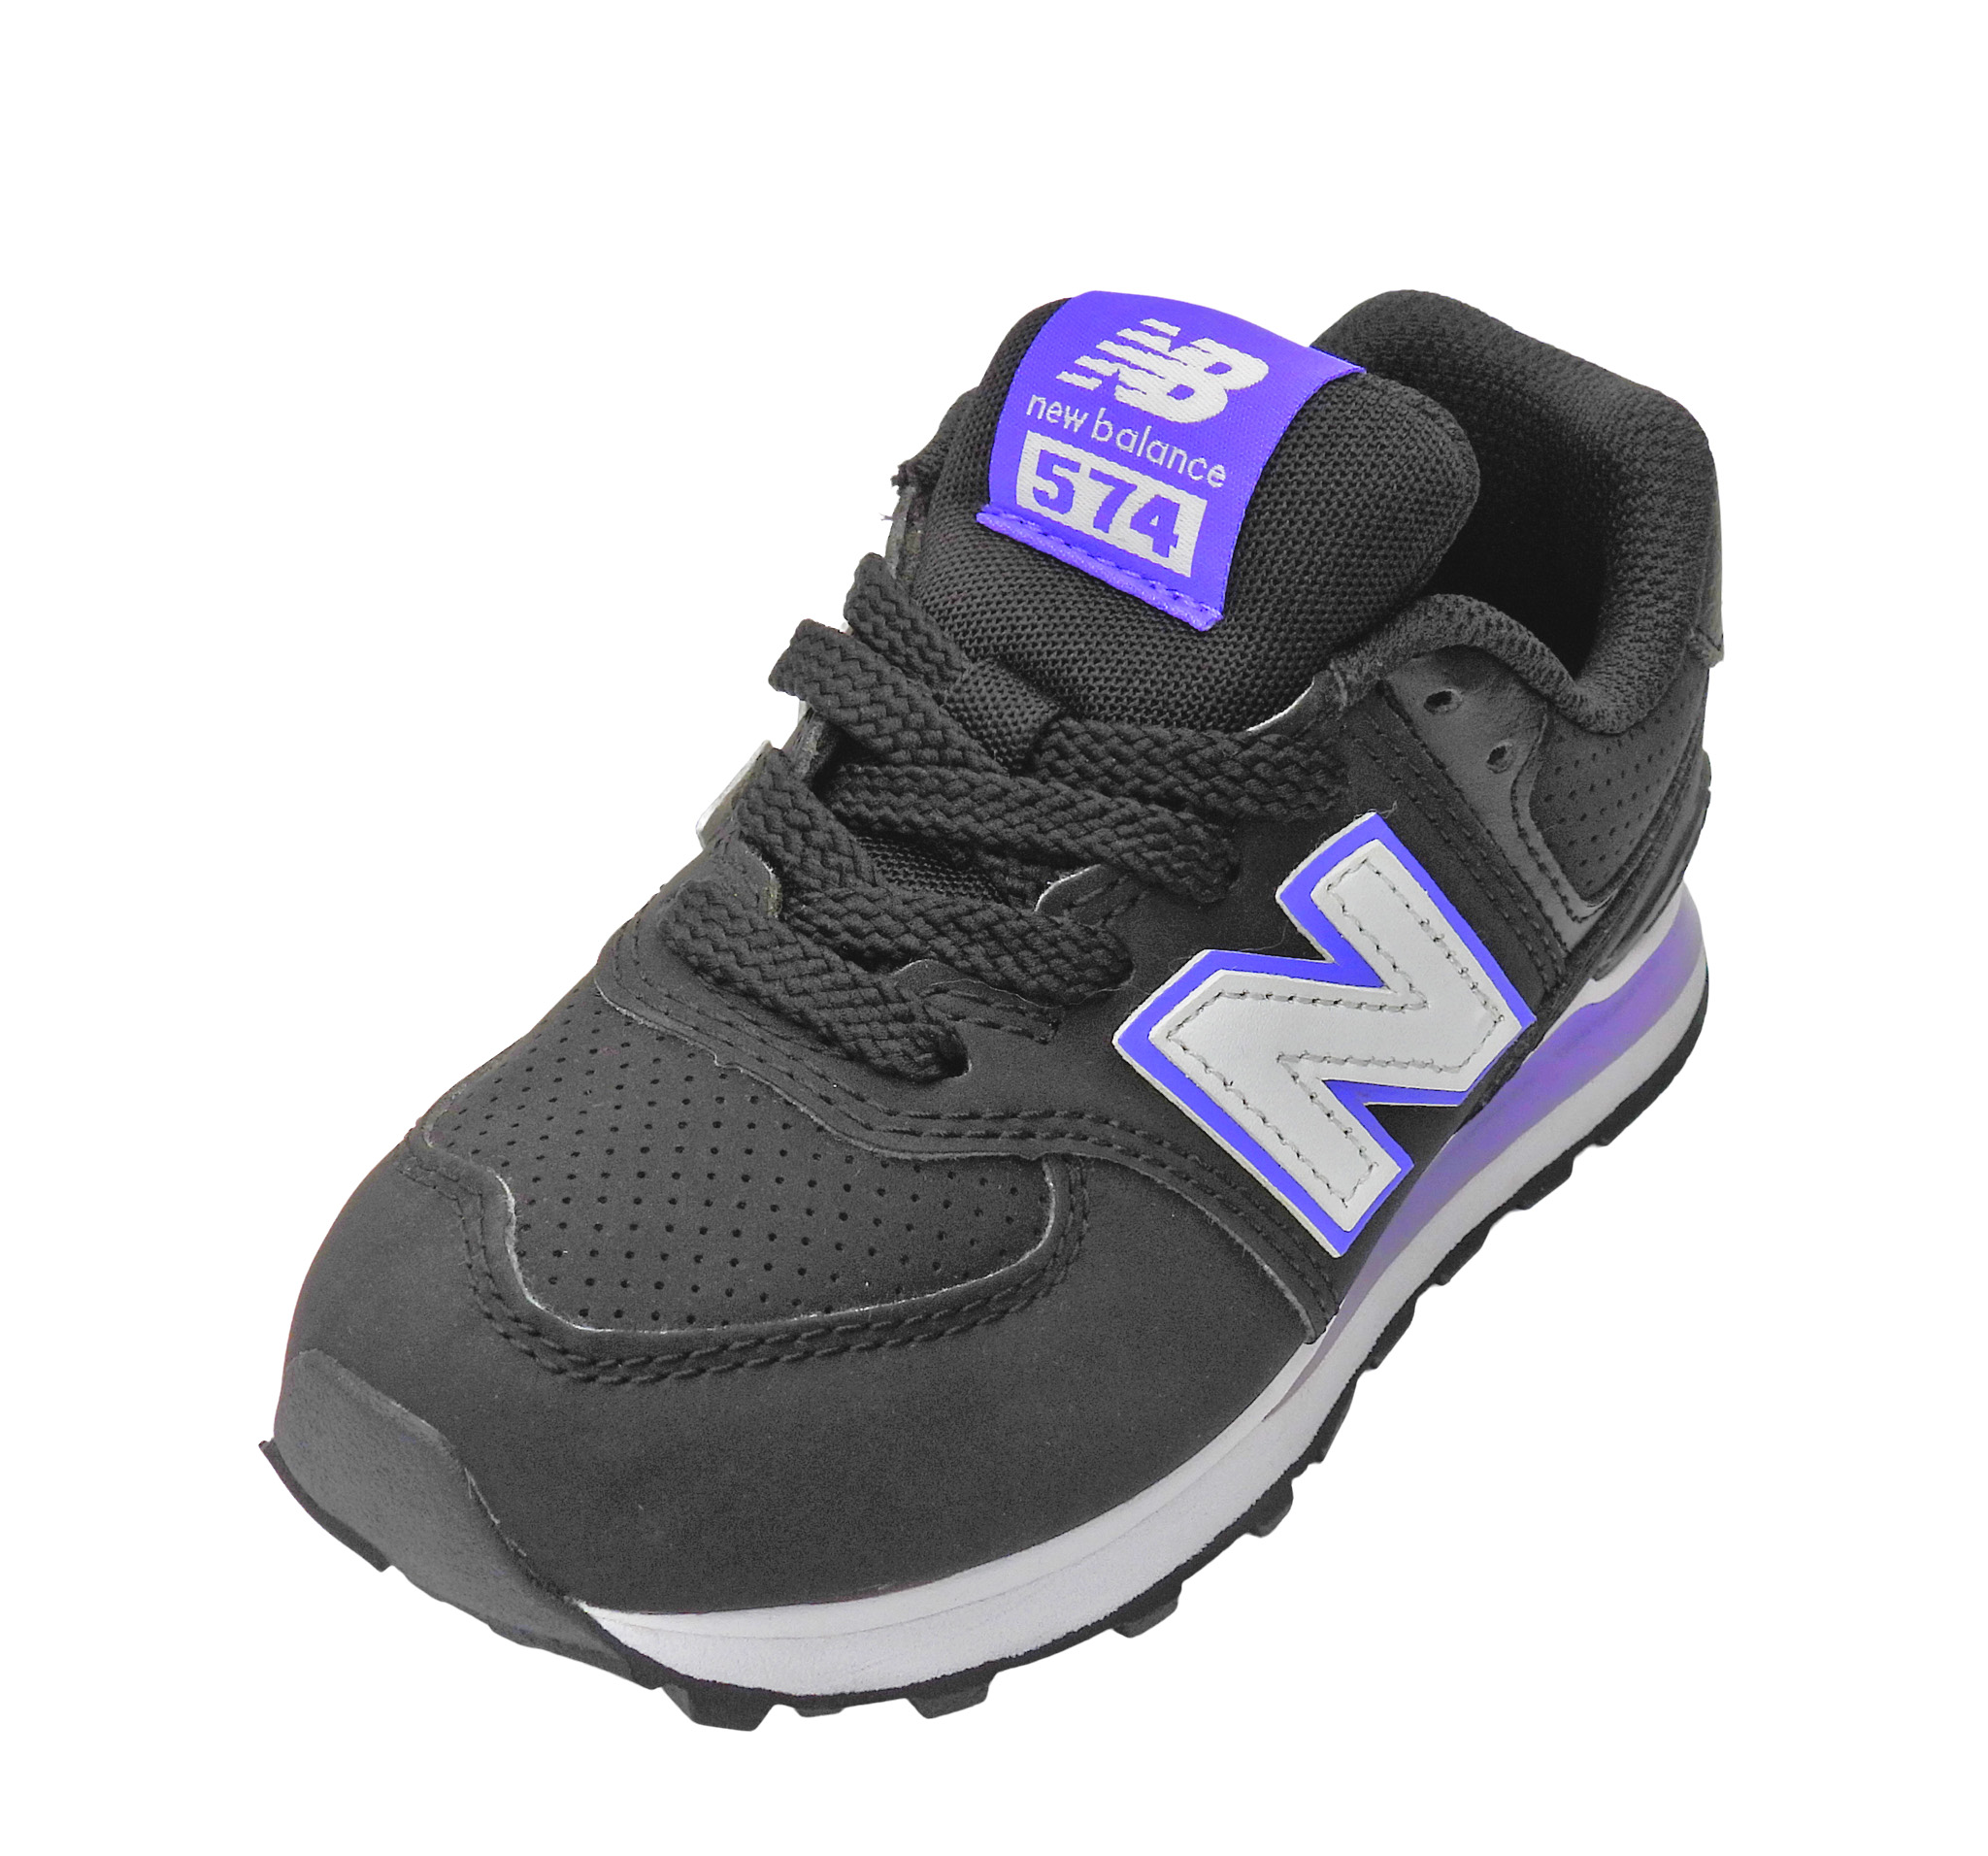 New Balance Black Purple Shoe